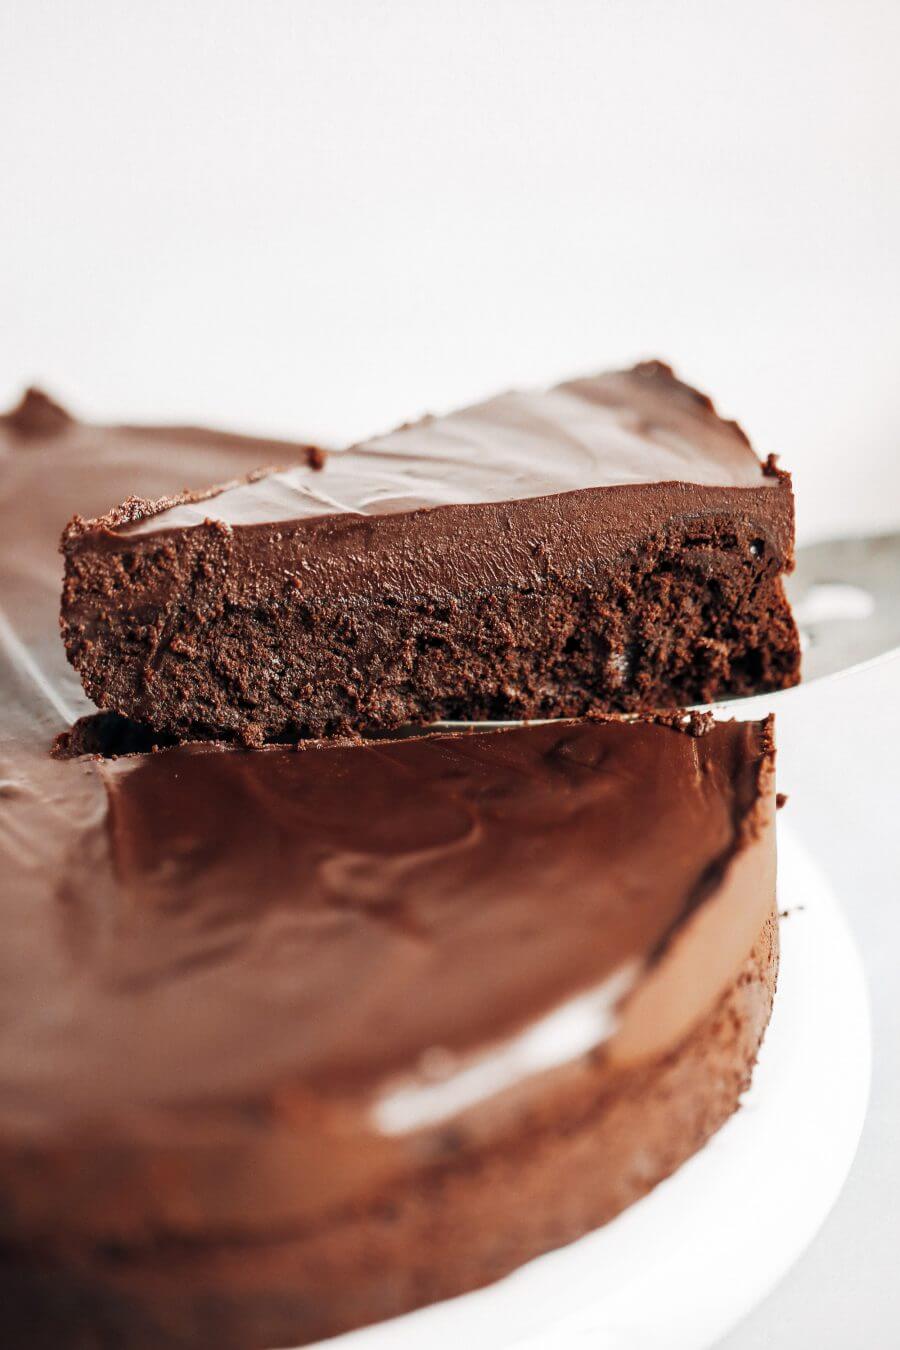 Recette de gâteau paléo primal au chocolat sans farine